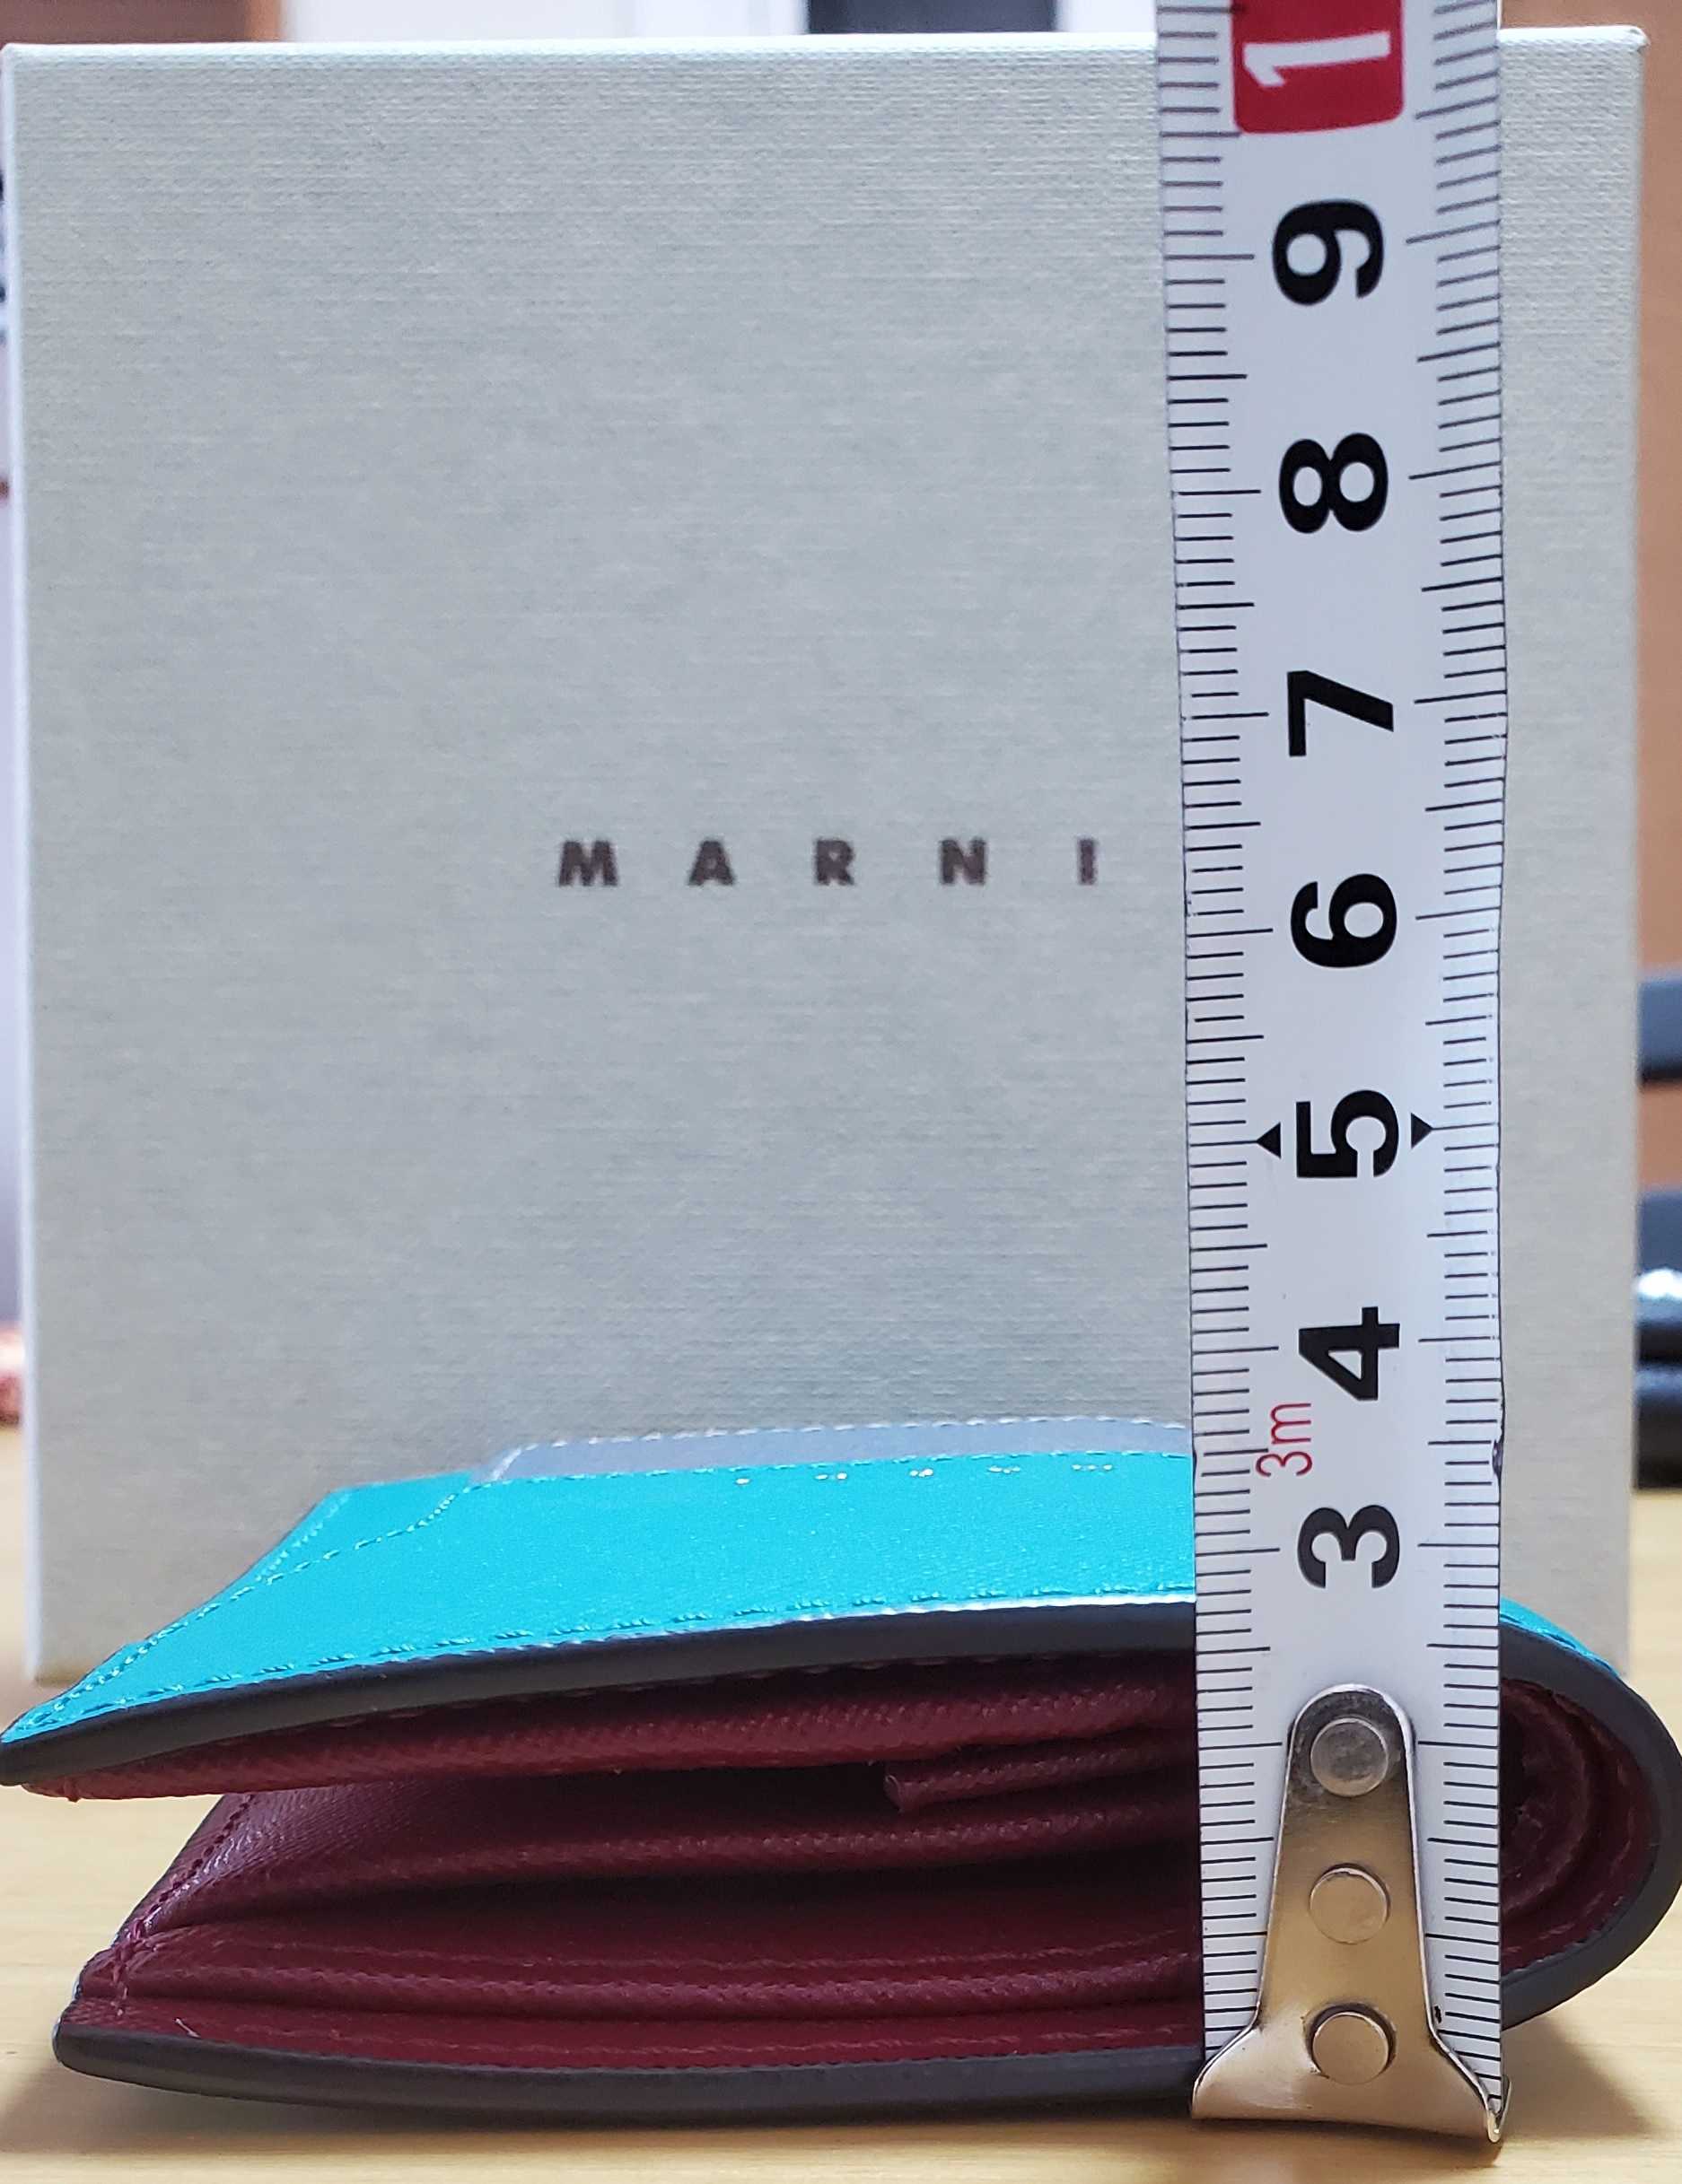 Marni - 【新品未使用】 MARNI マルニ 財布 二つ折り財布 サフィアーノ